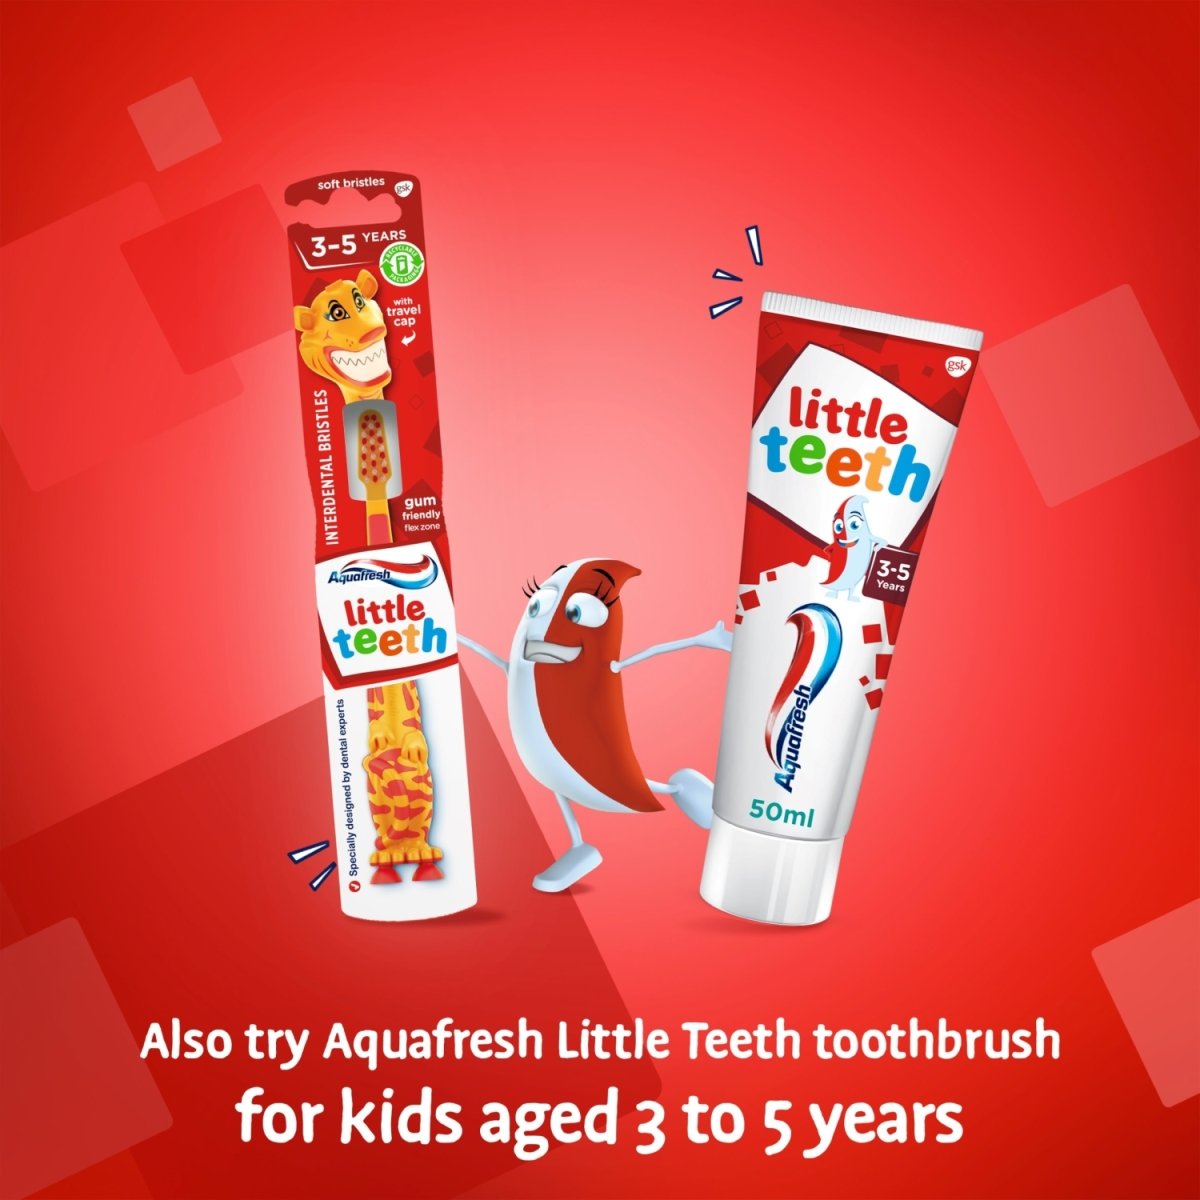 Aquafresh Kids Toothpaste 50ml Little Teeth 3-5 Years - Intamarque 5000347090943